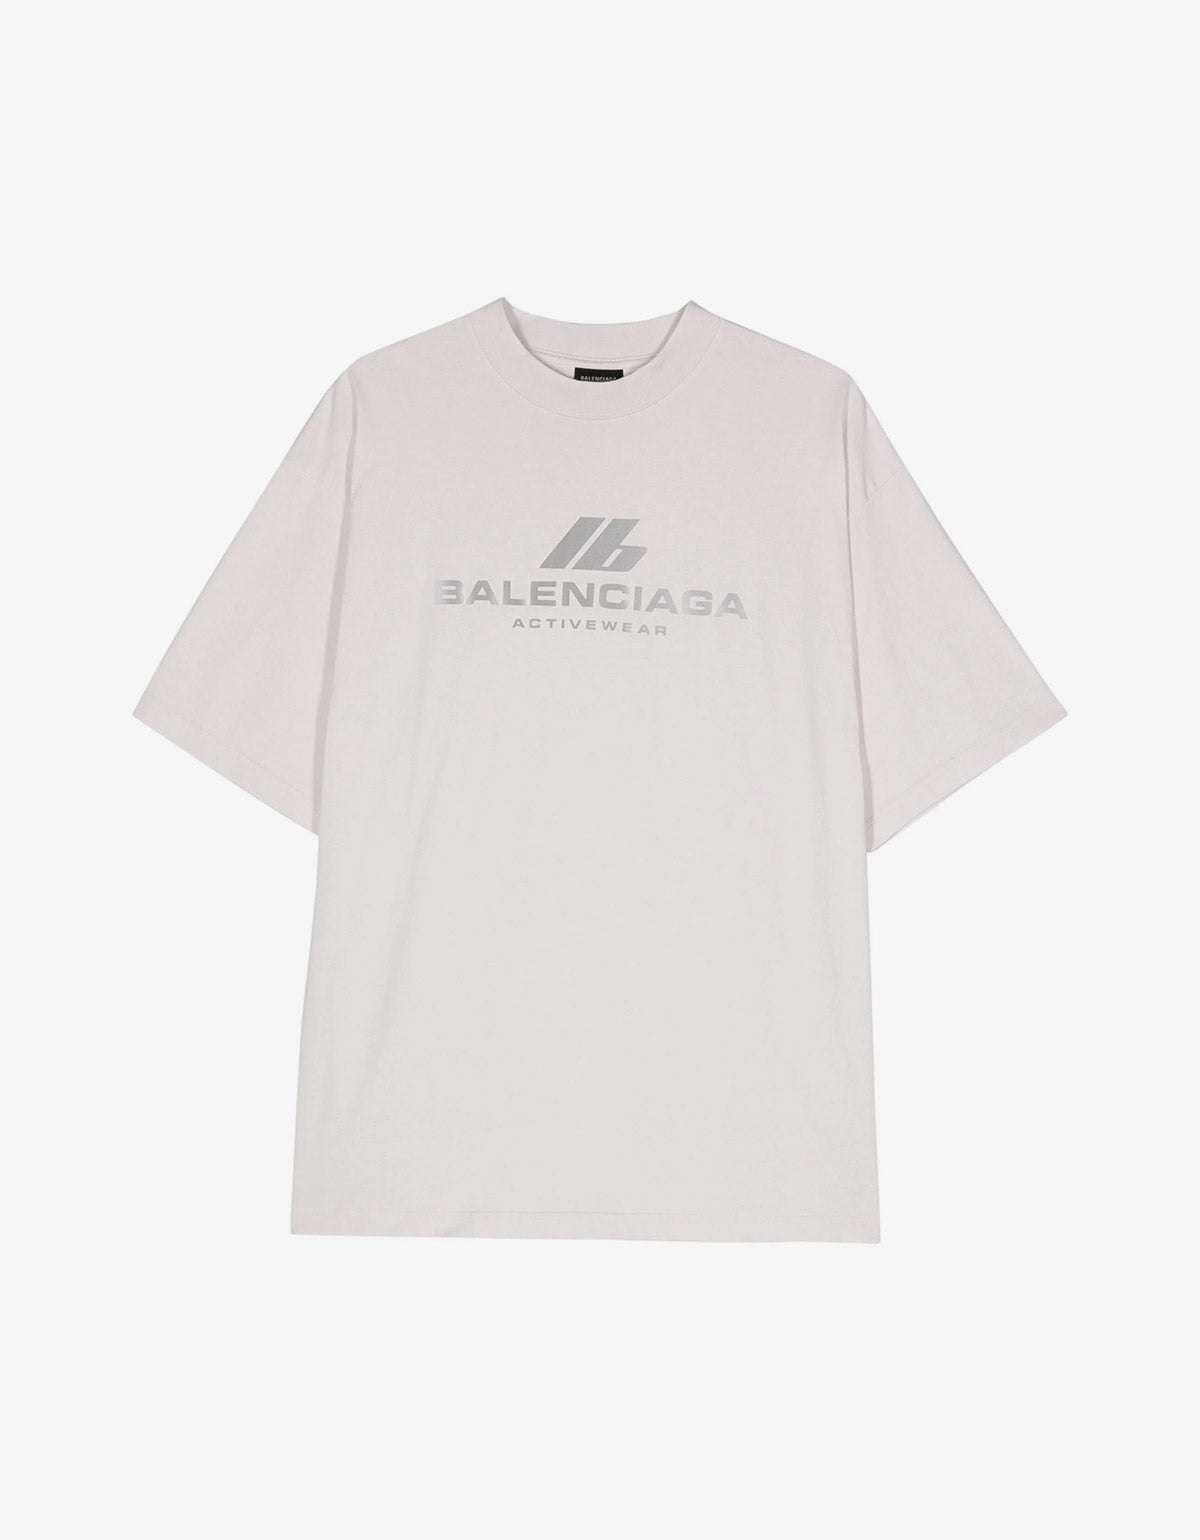 Balenciaga White Activewear Medium Fit T-Shirt